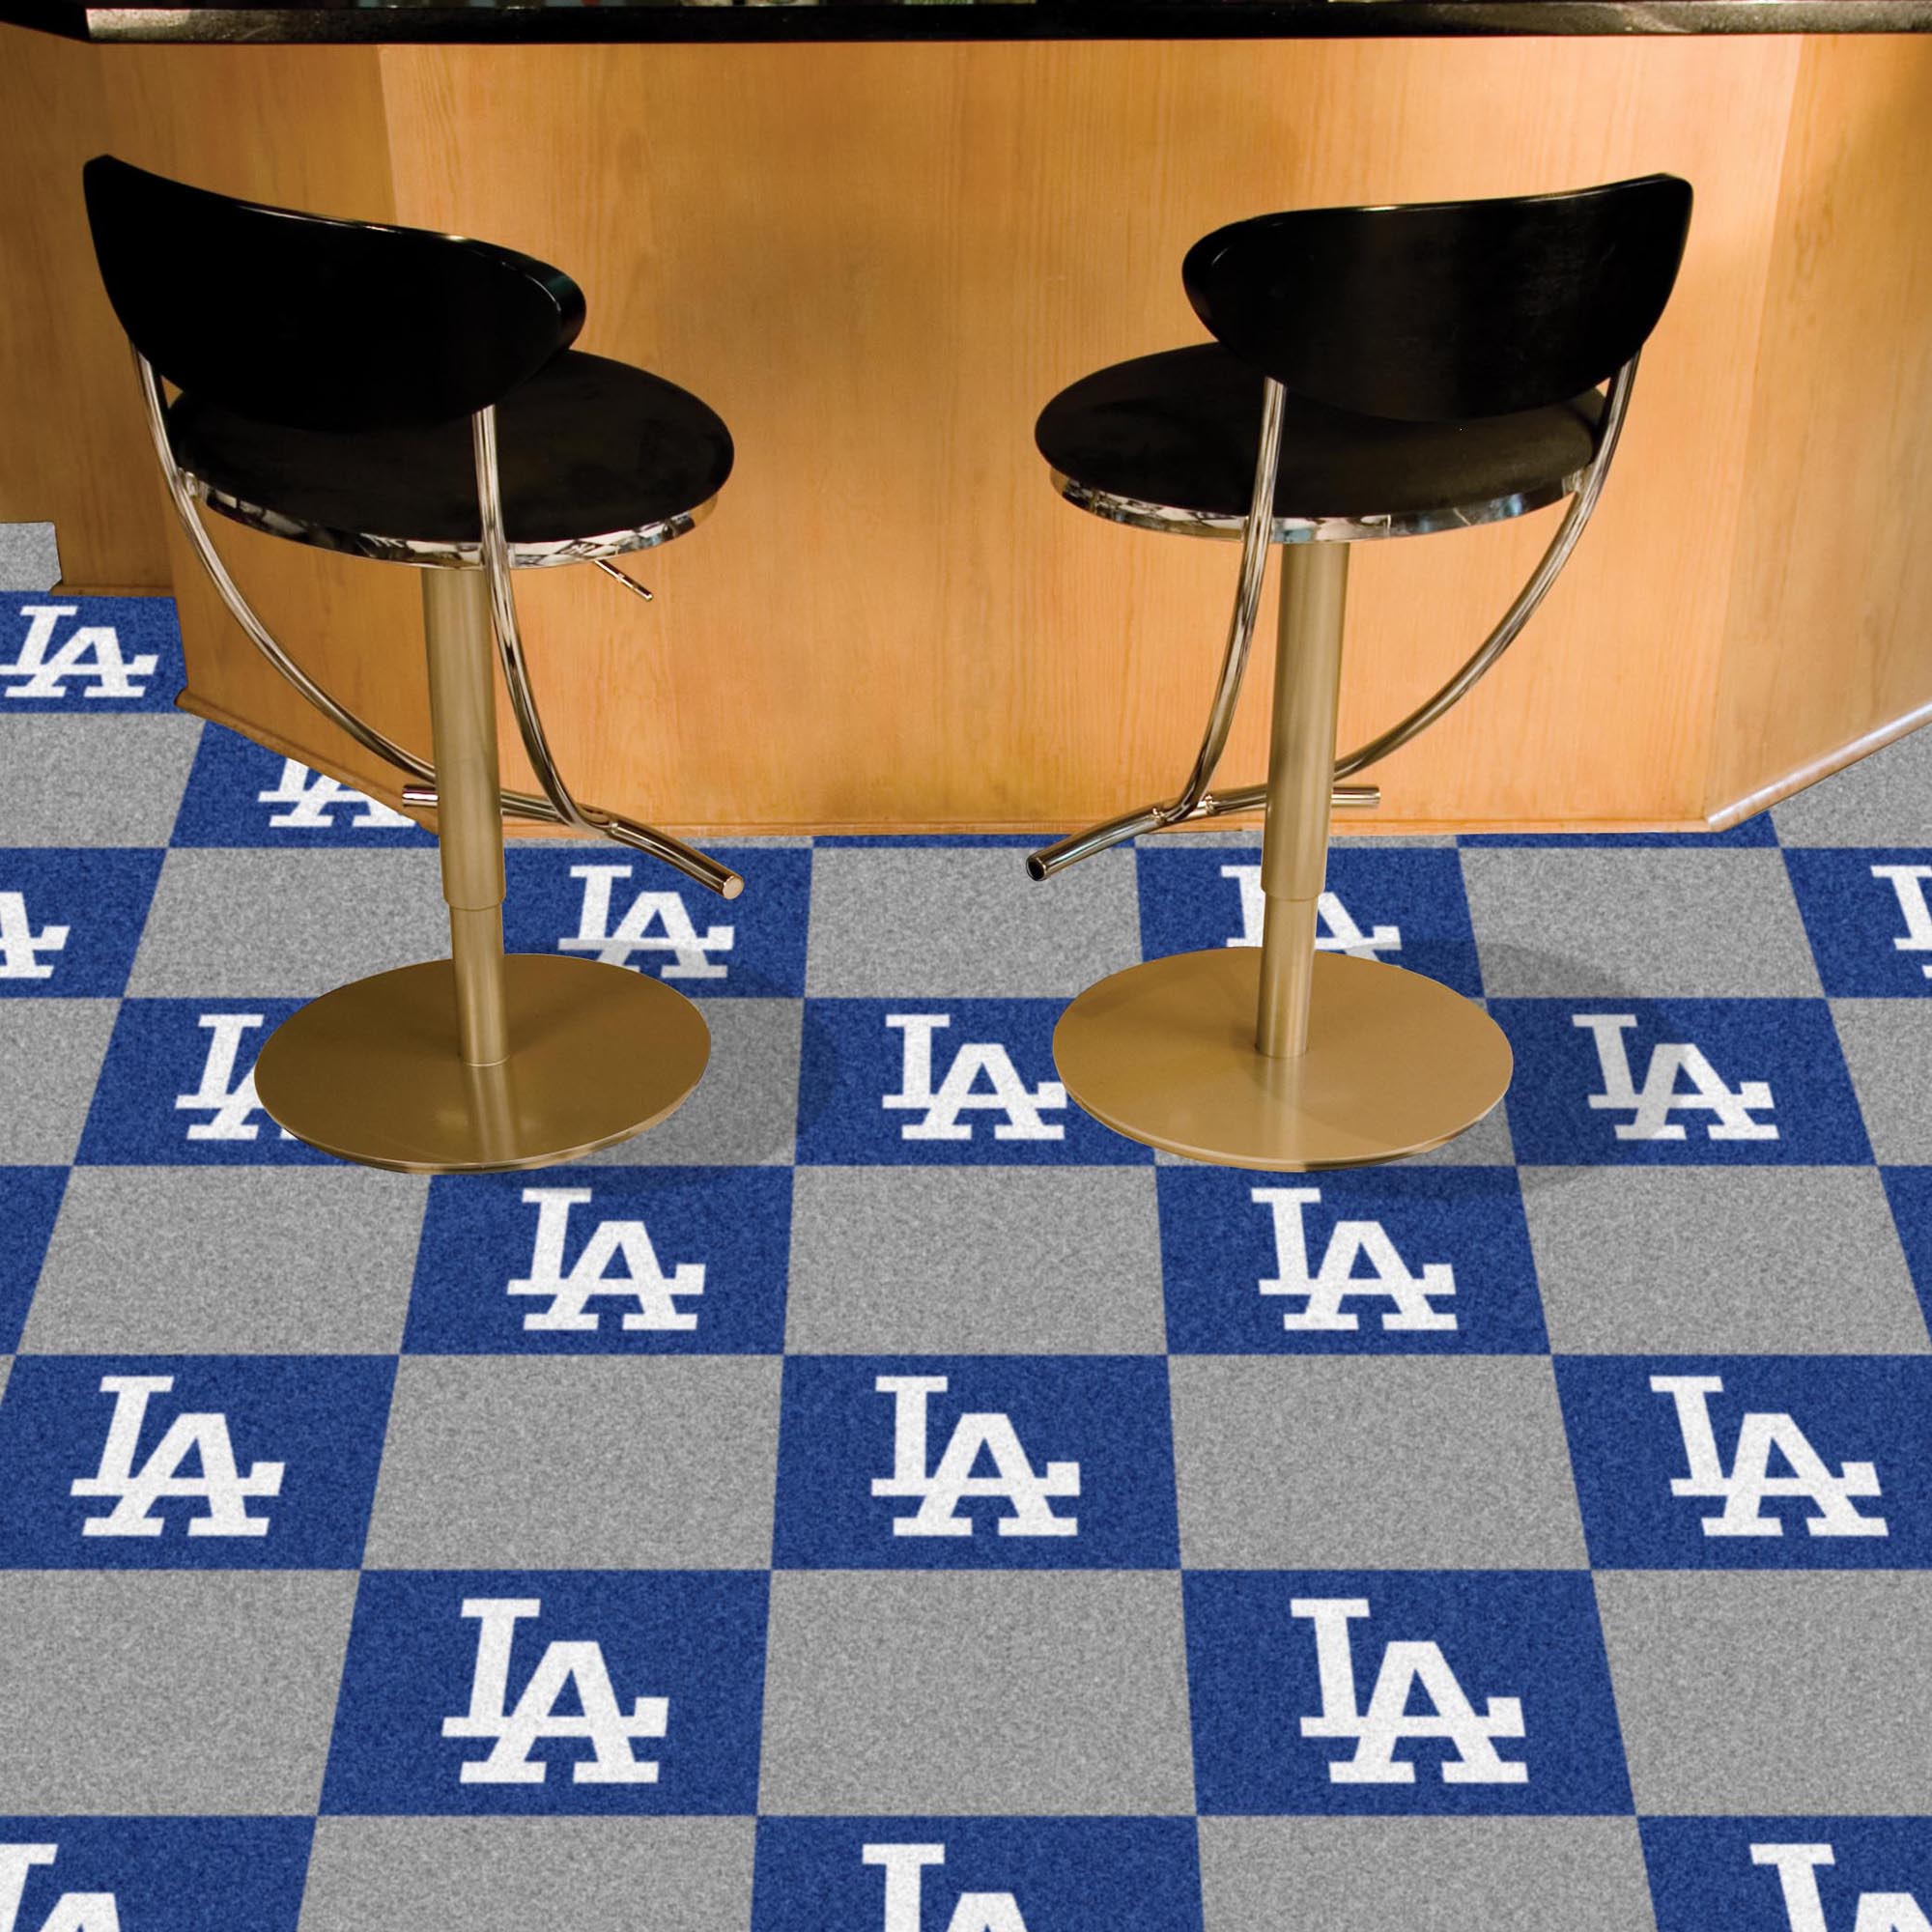 Los Angeles Dodgers Carpet Tiles 18x18 in.